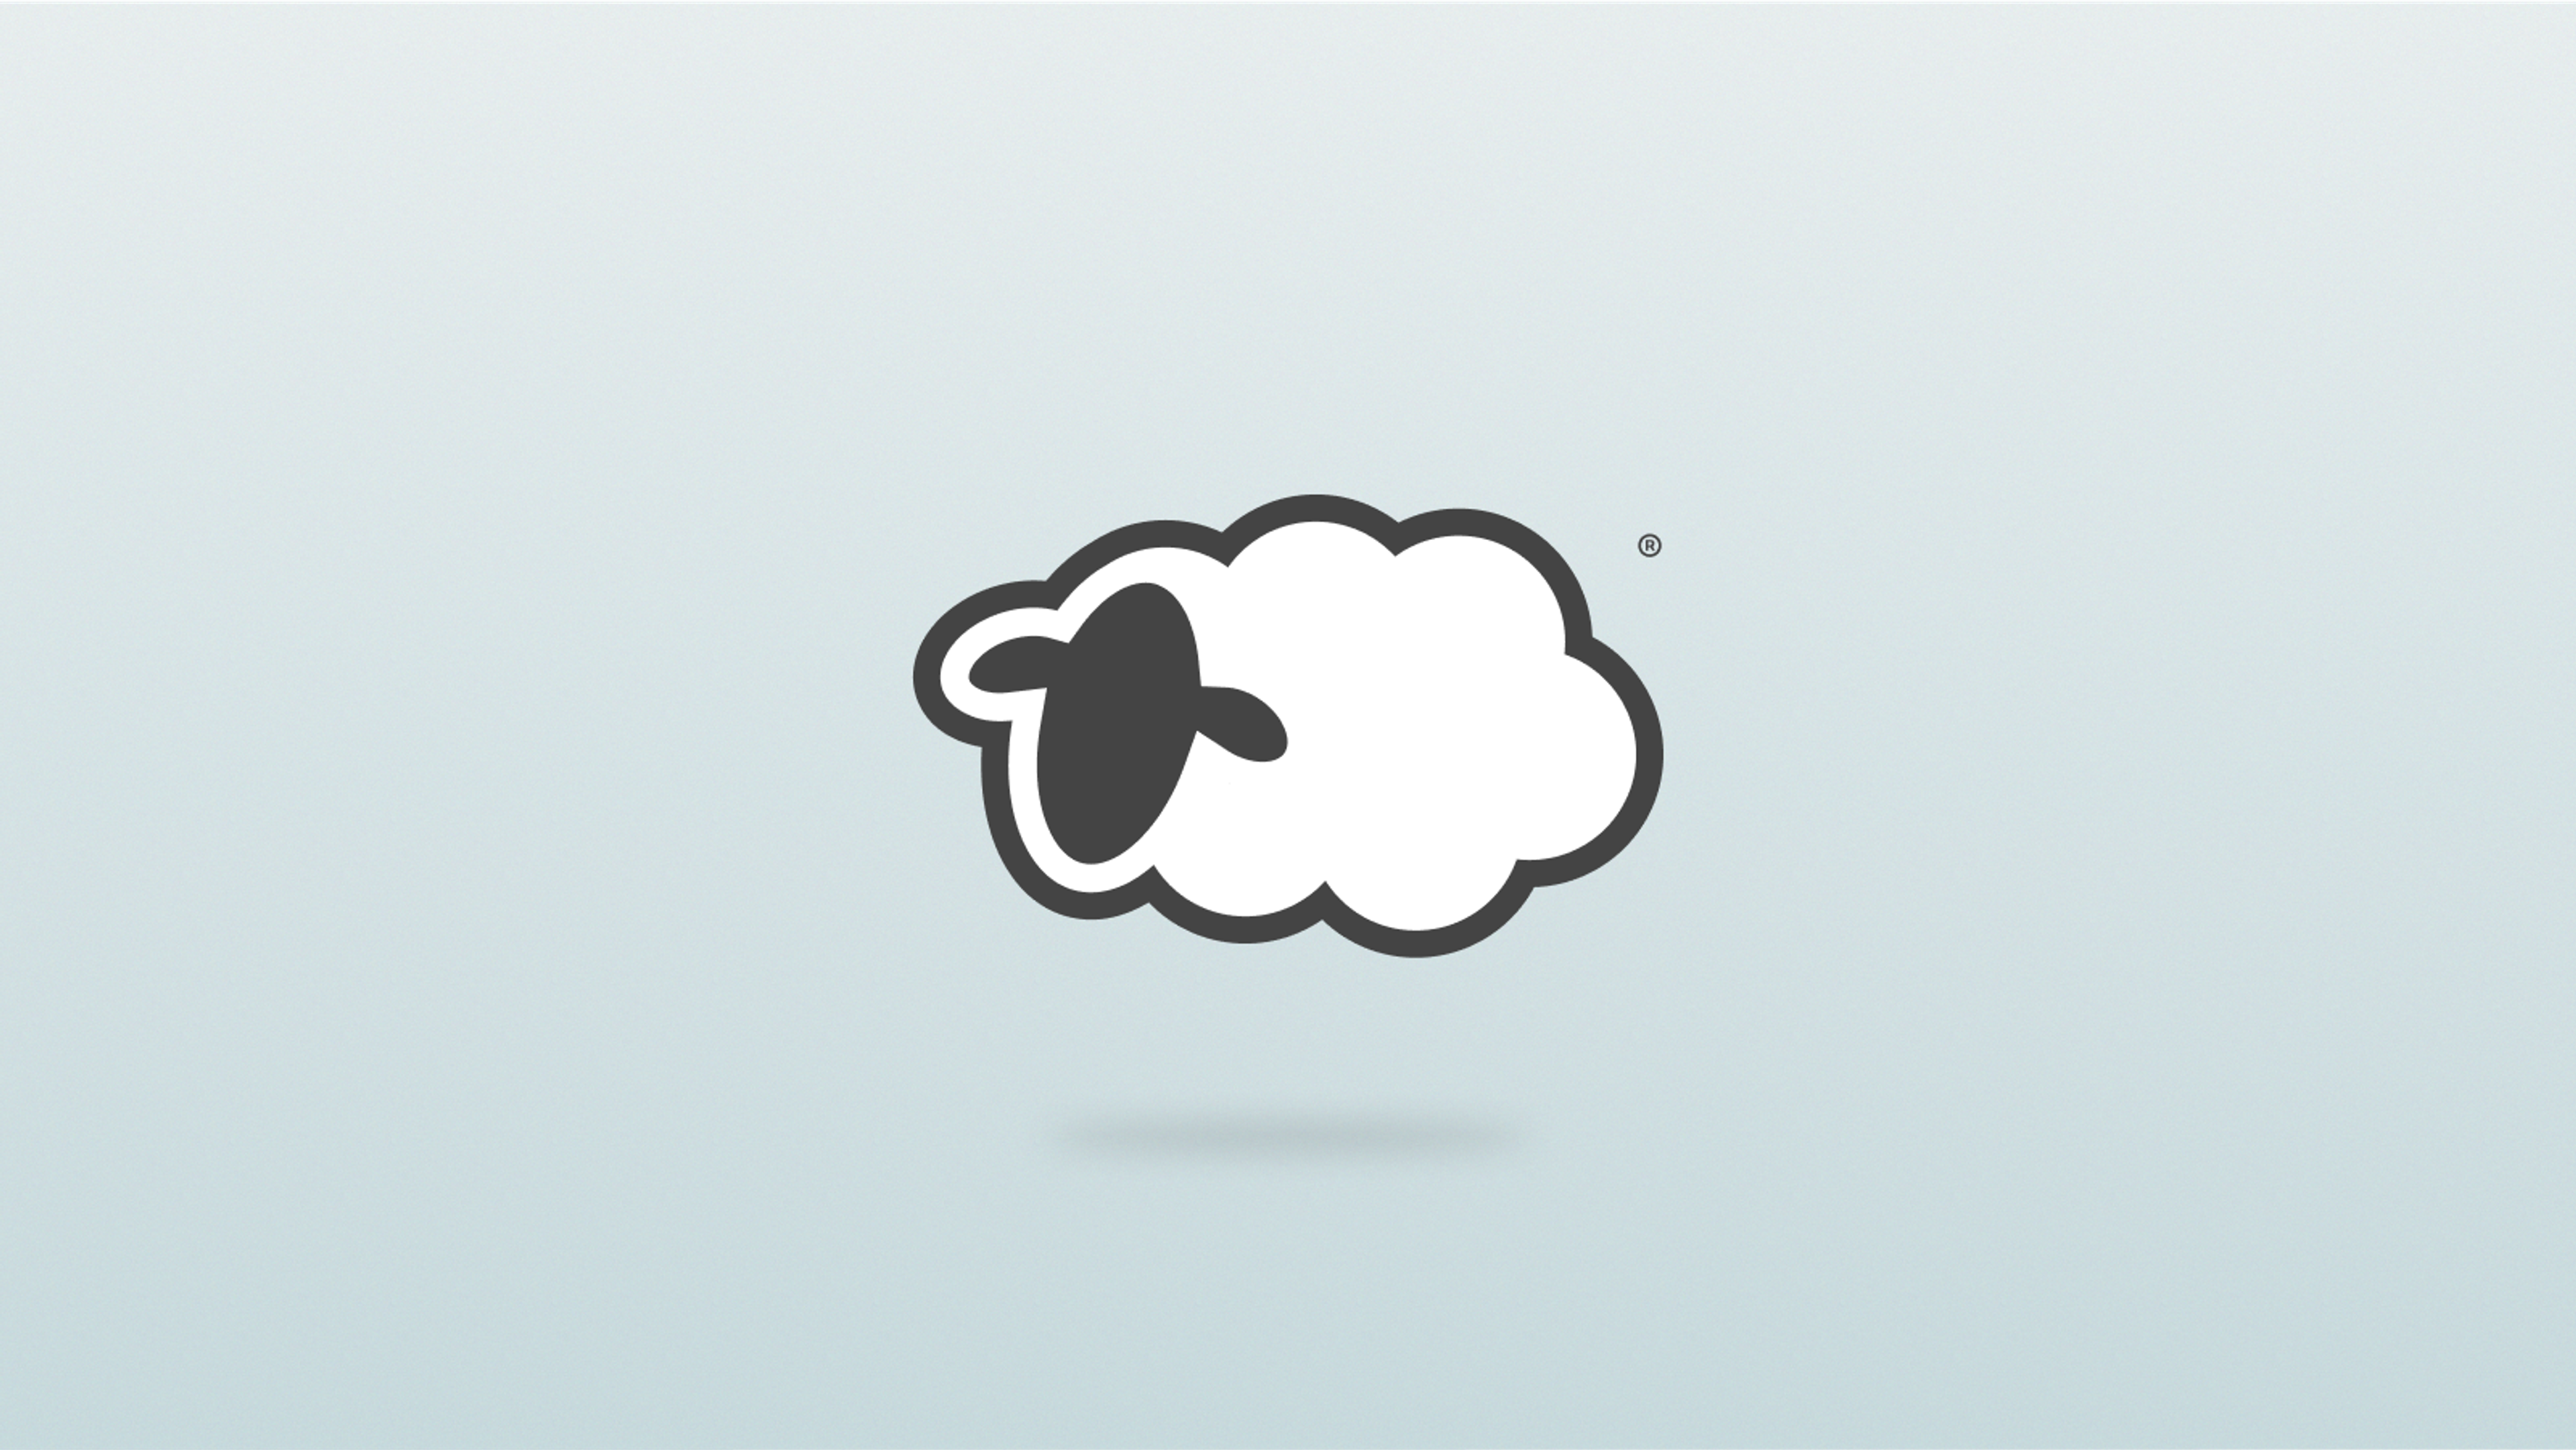 The Flocker sheep icon that I designed